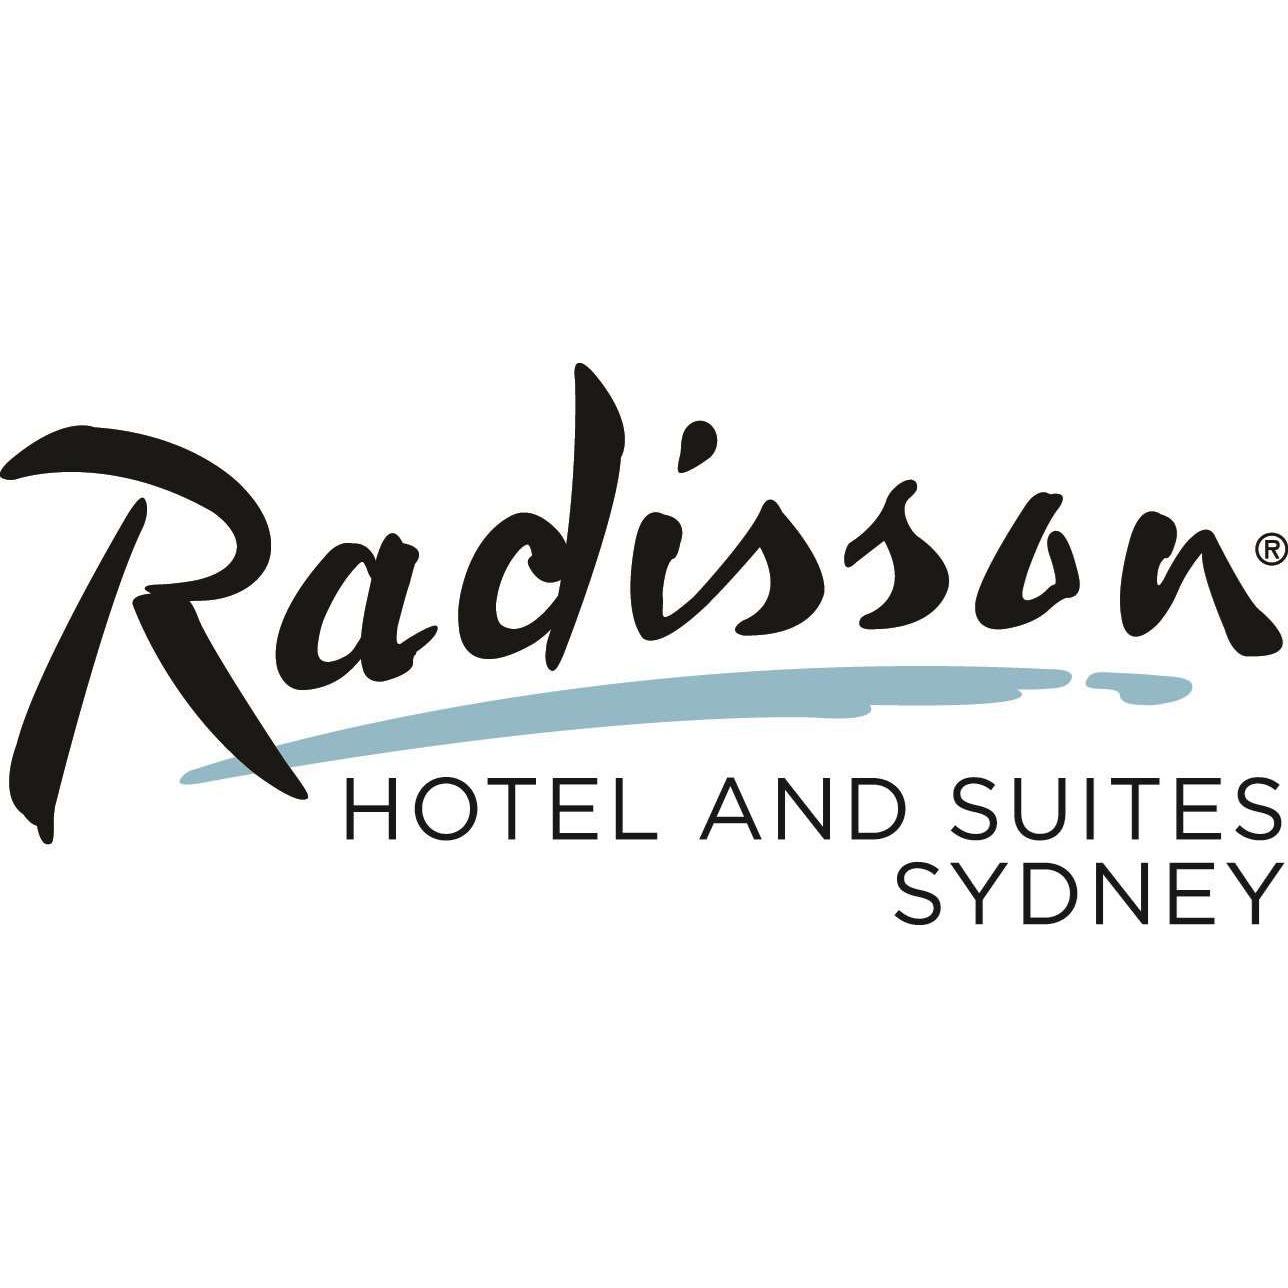 Radisson Hotel and Suites Sydney - Closed Logo